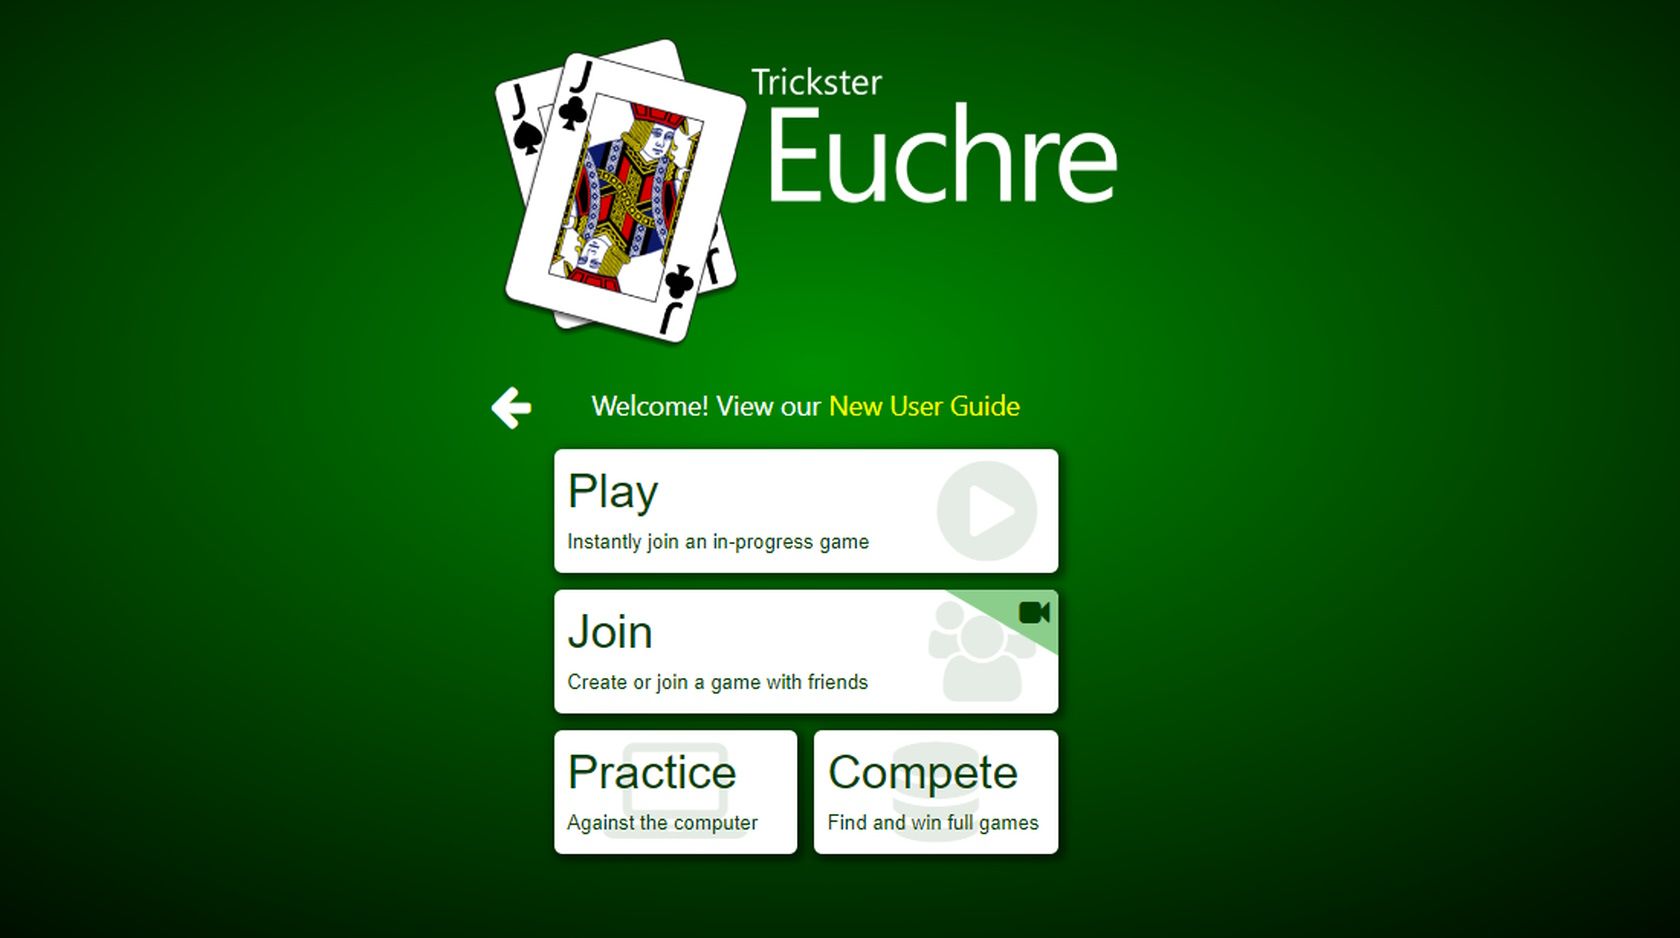 euchre trickster card game website